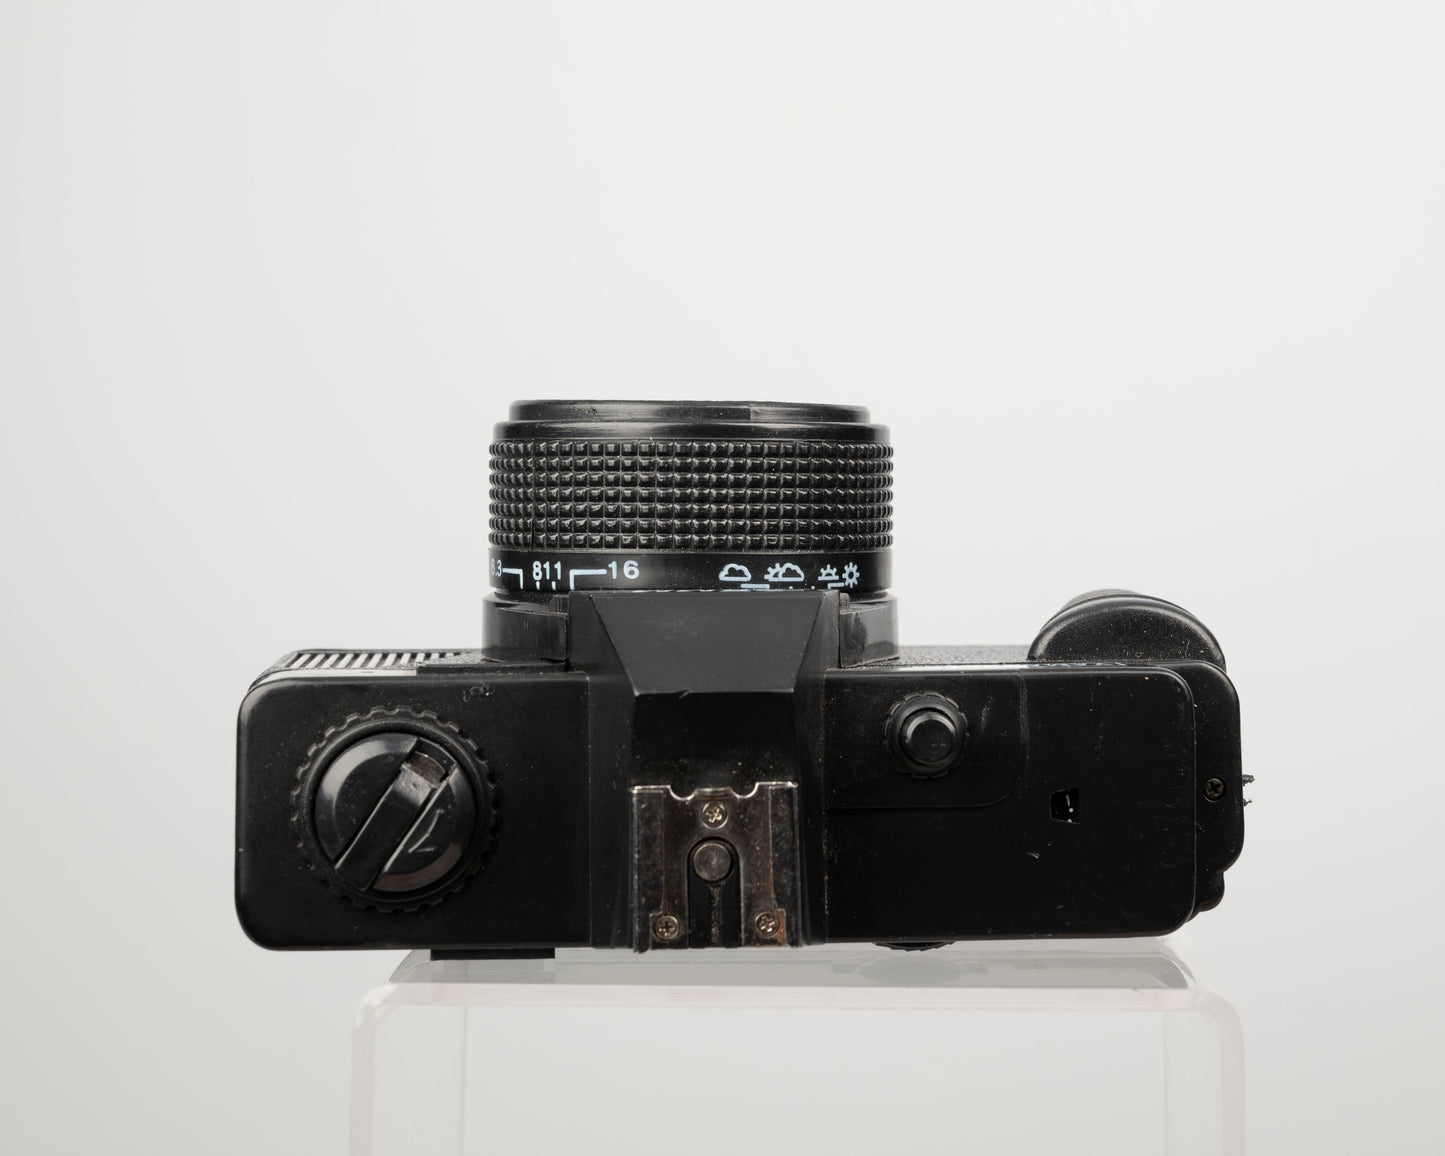 Yamasheta 35mm film camera